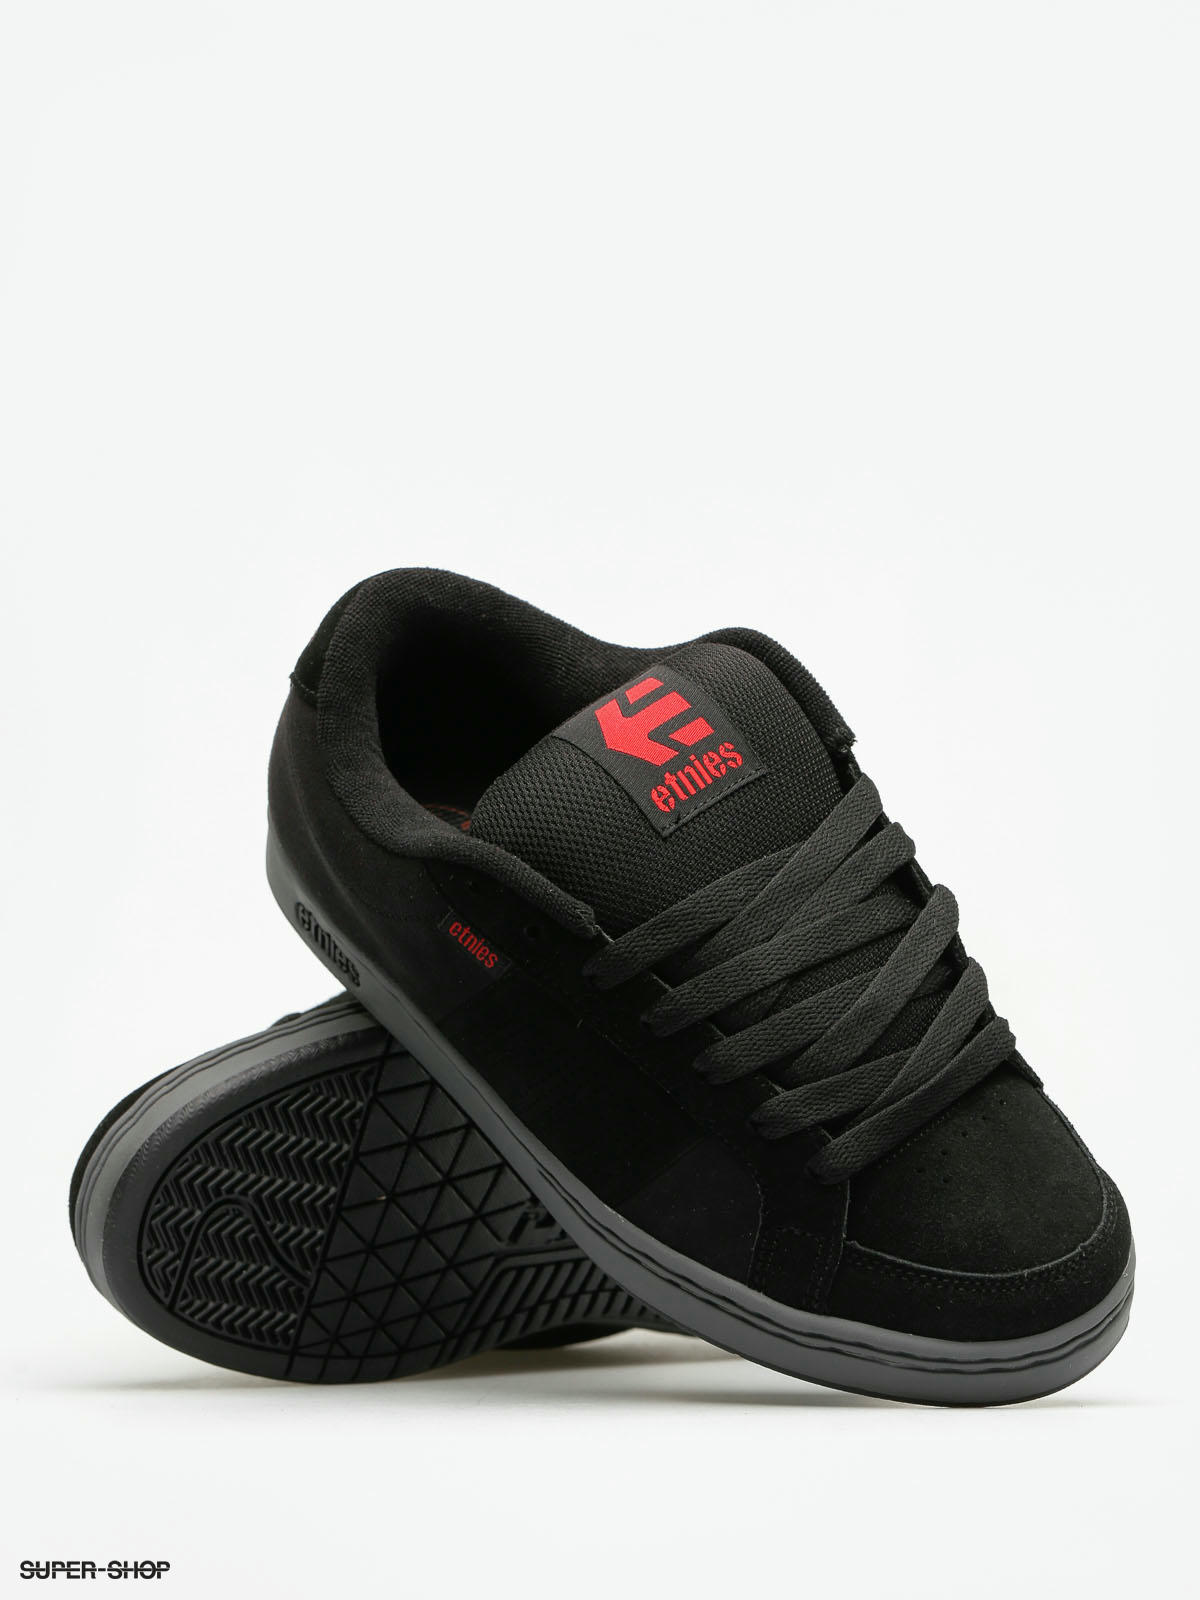 ETNIES Kingpin Black Red Skate Shoes Kids Size US 12 EUR 30